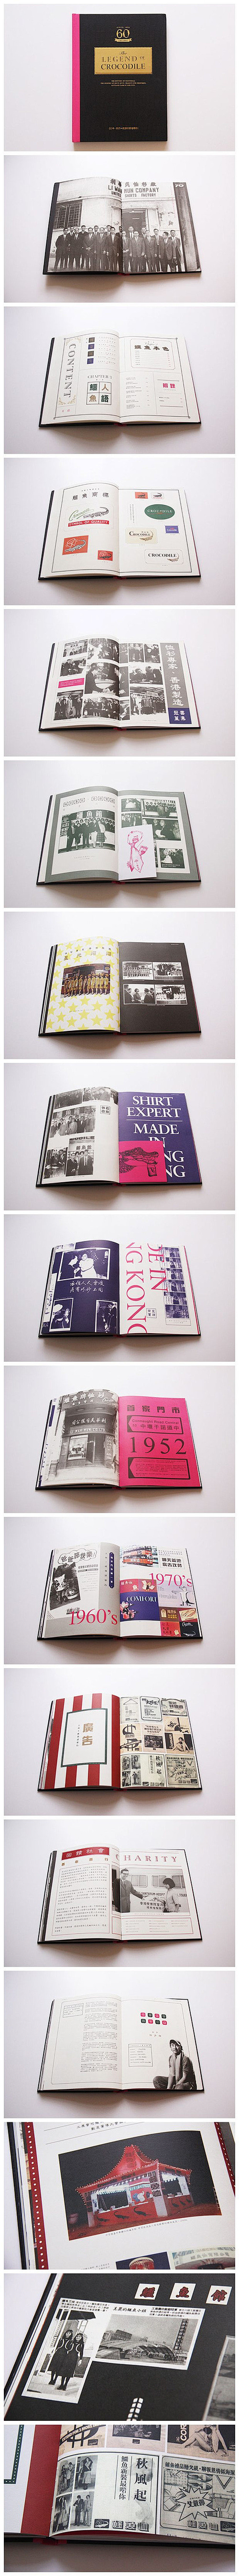 香港Ken Lo书籍设计